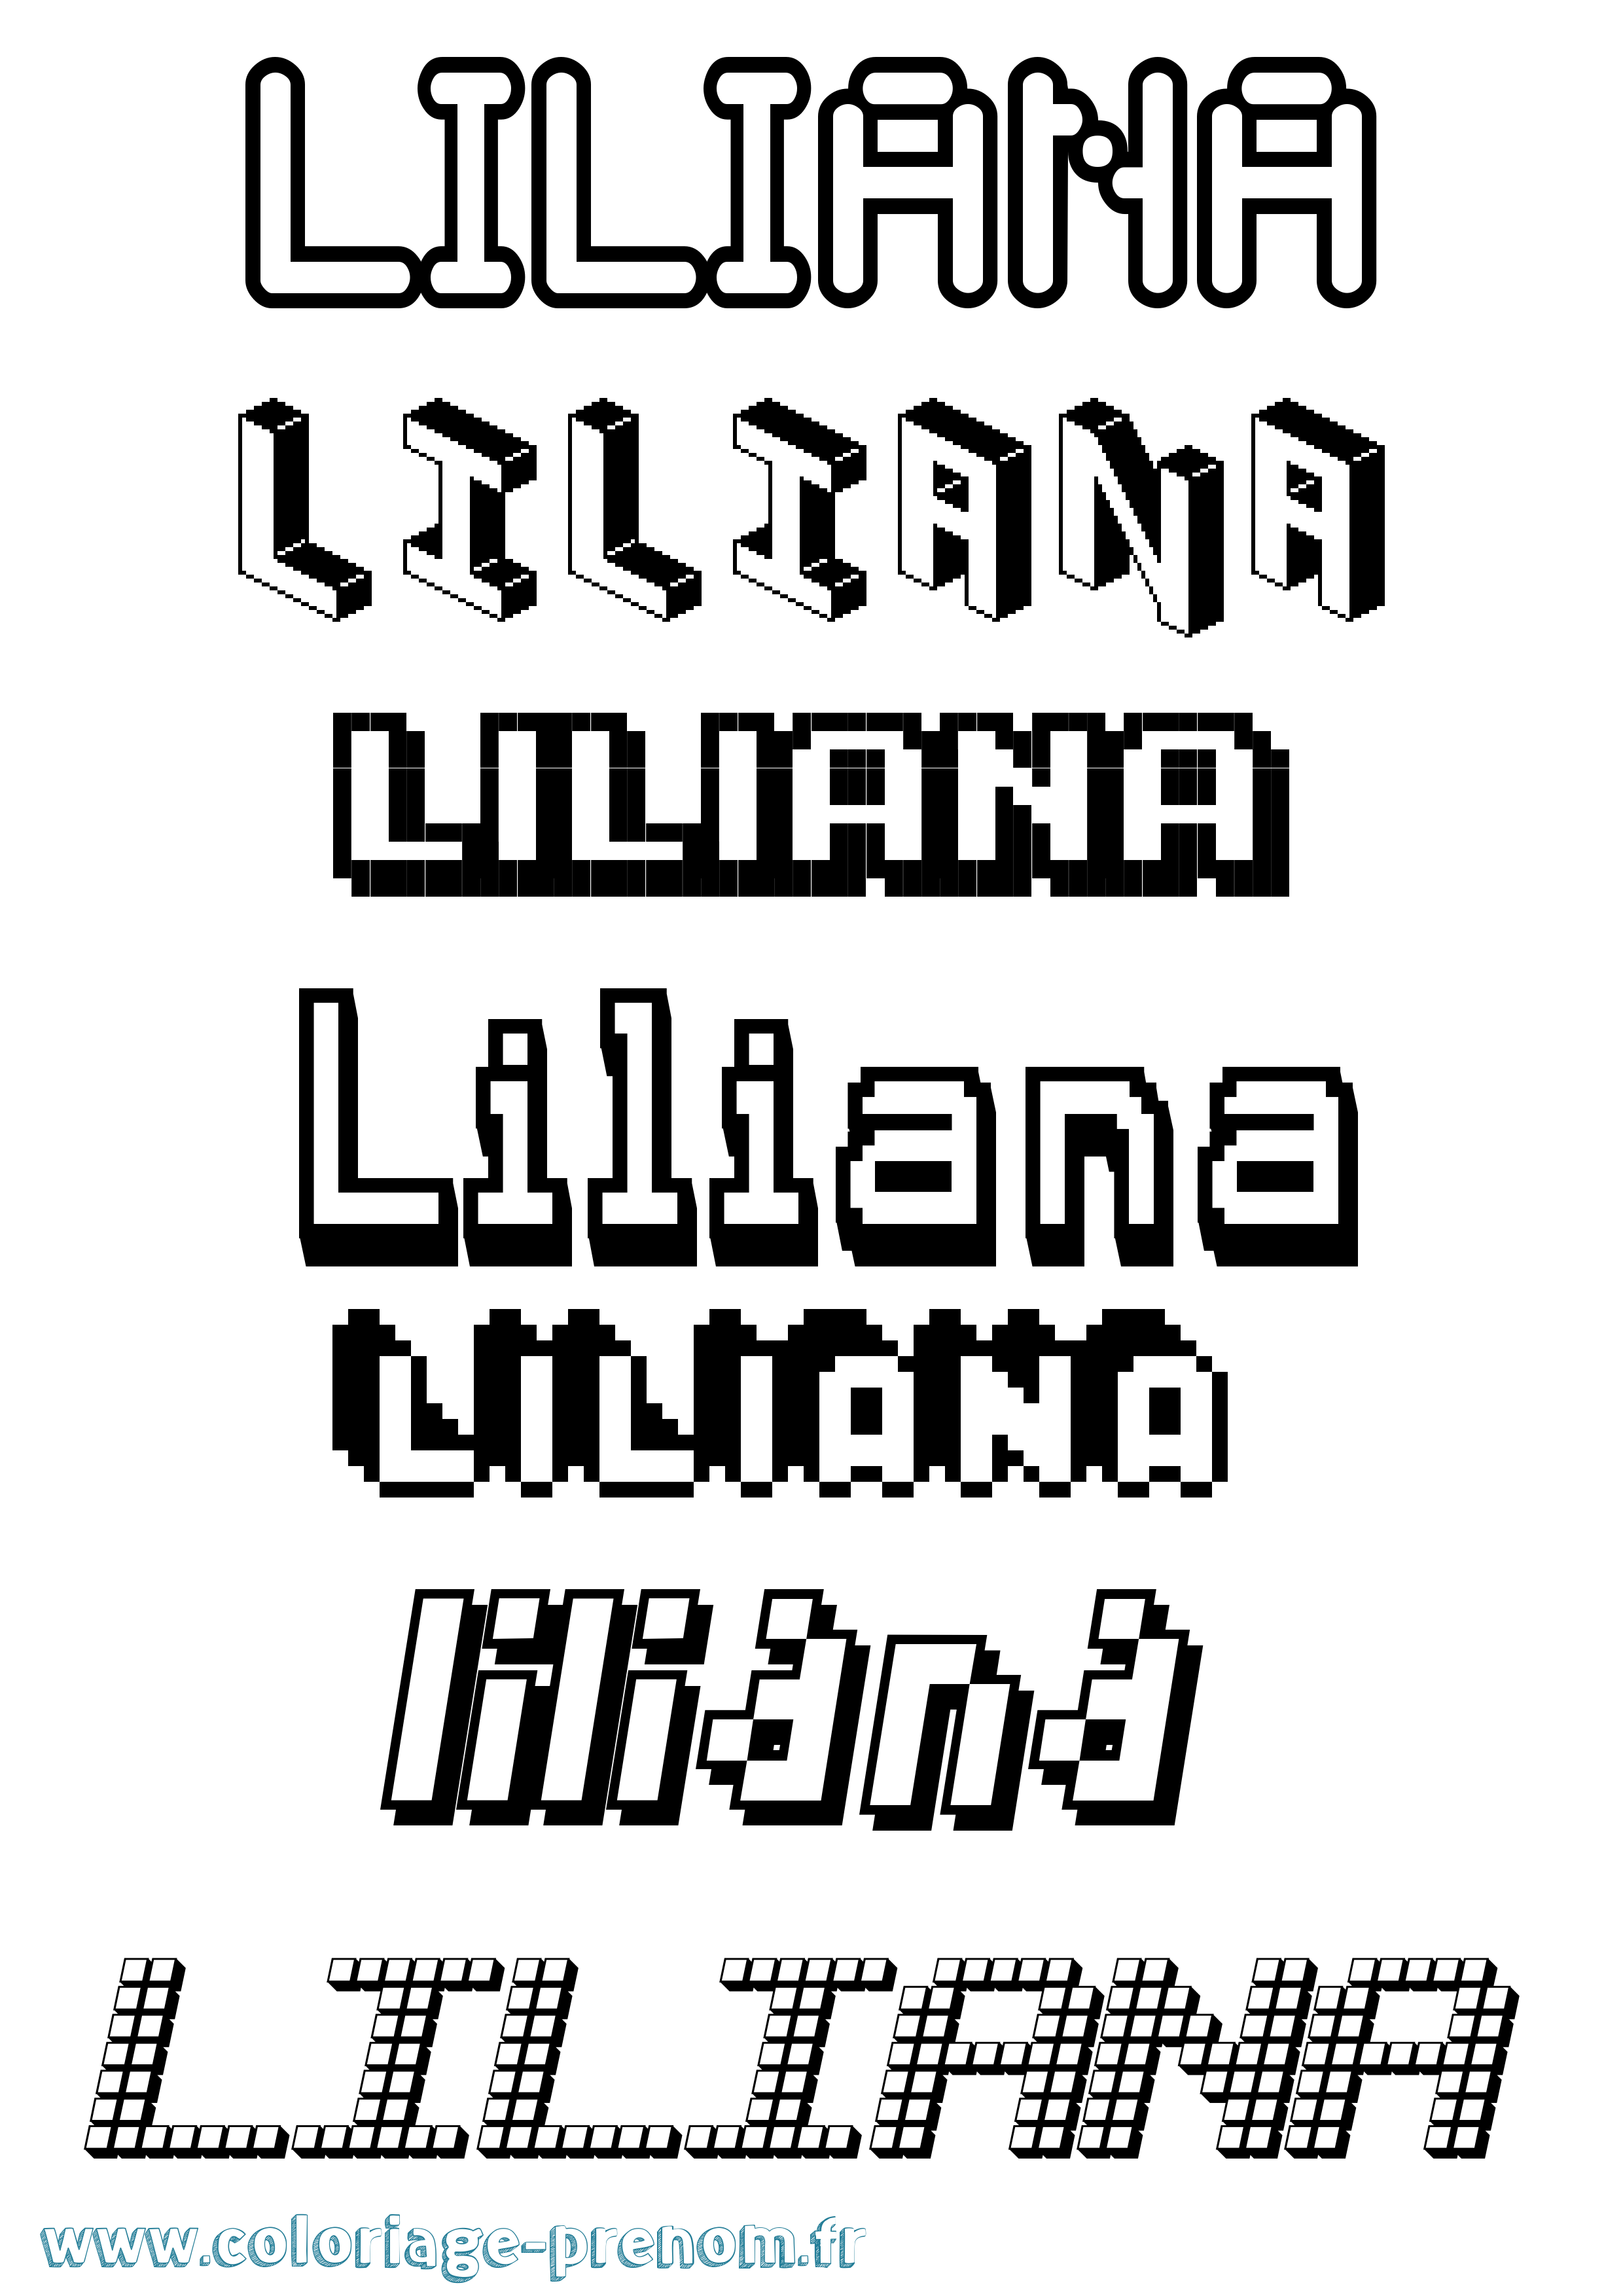 Coloriage prénom Liliana